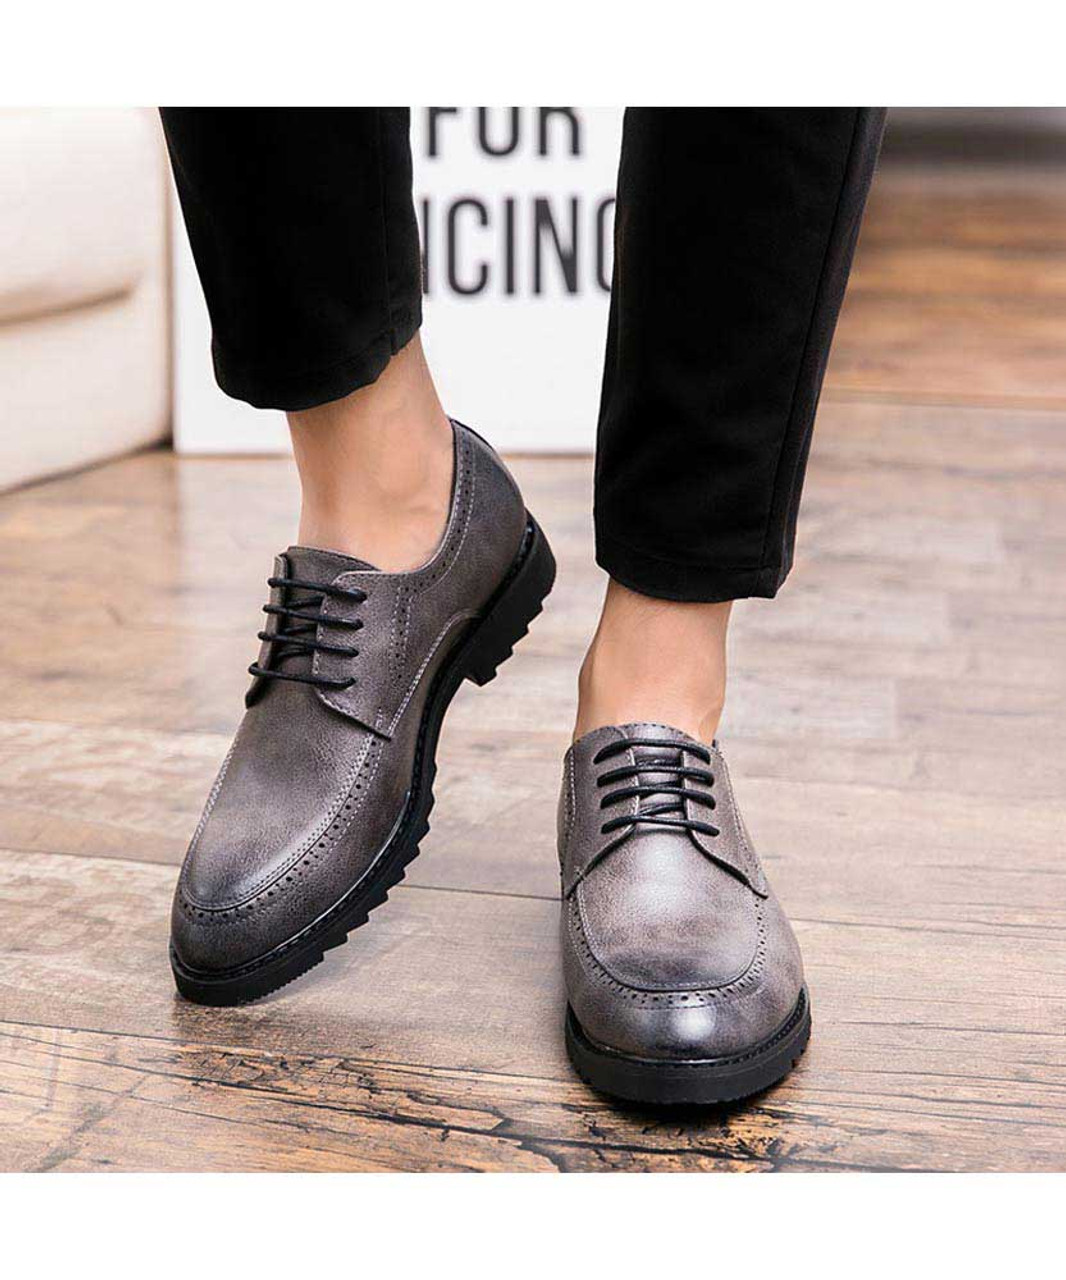 Grey retro brogue leather derby dress shoe | Mens dress shoes online 1623MS